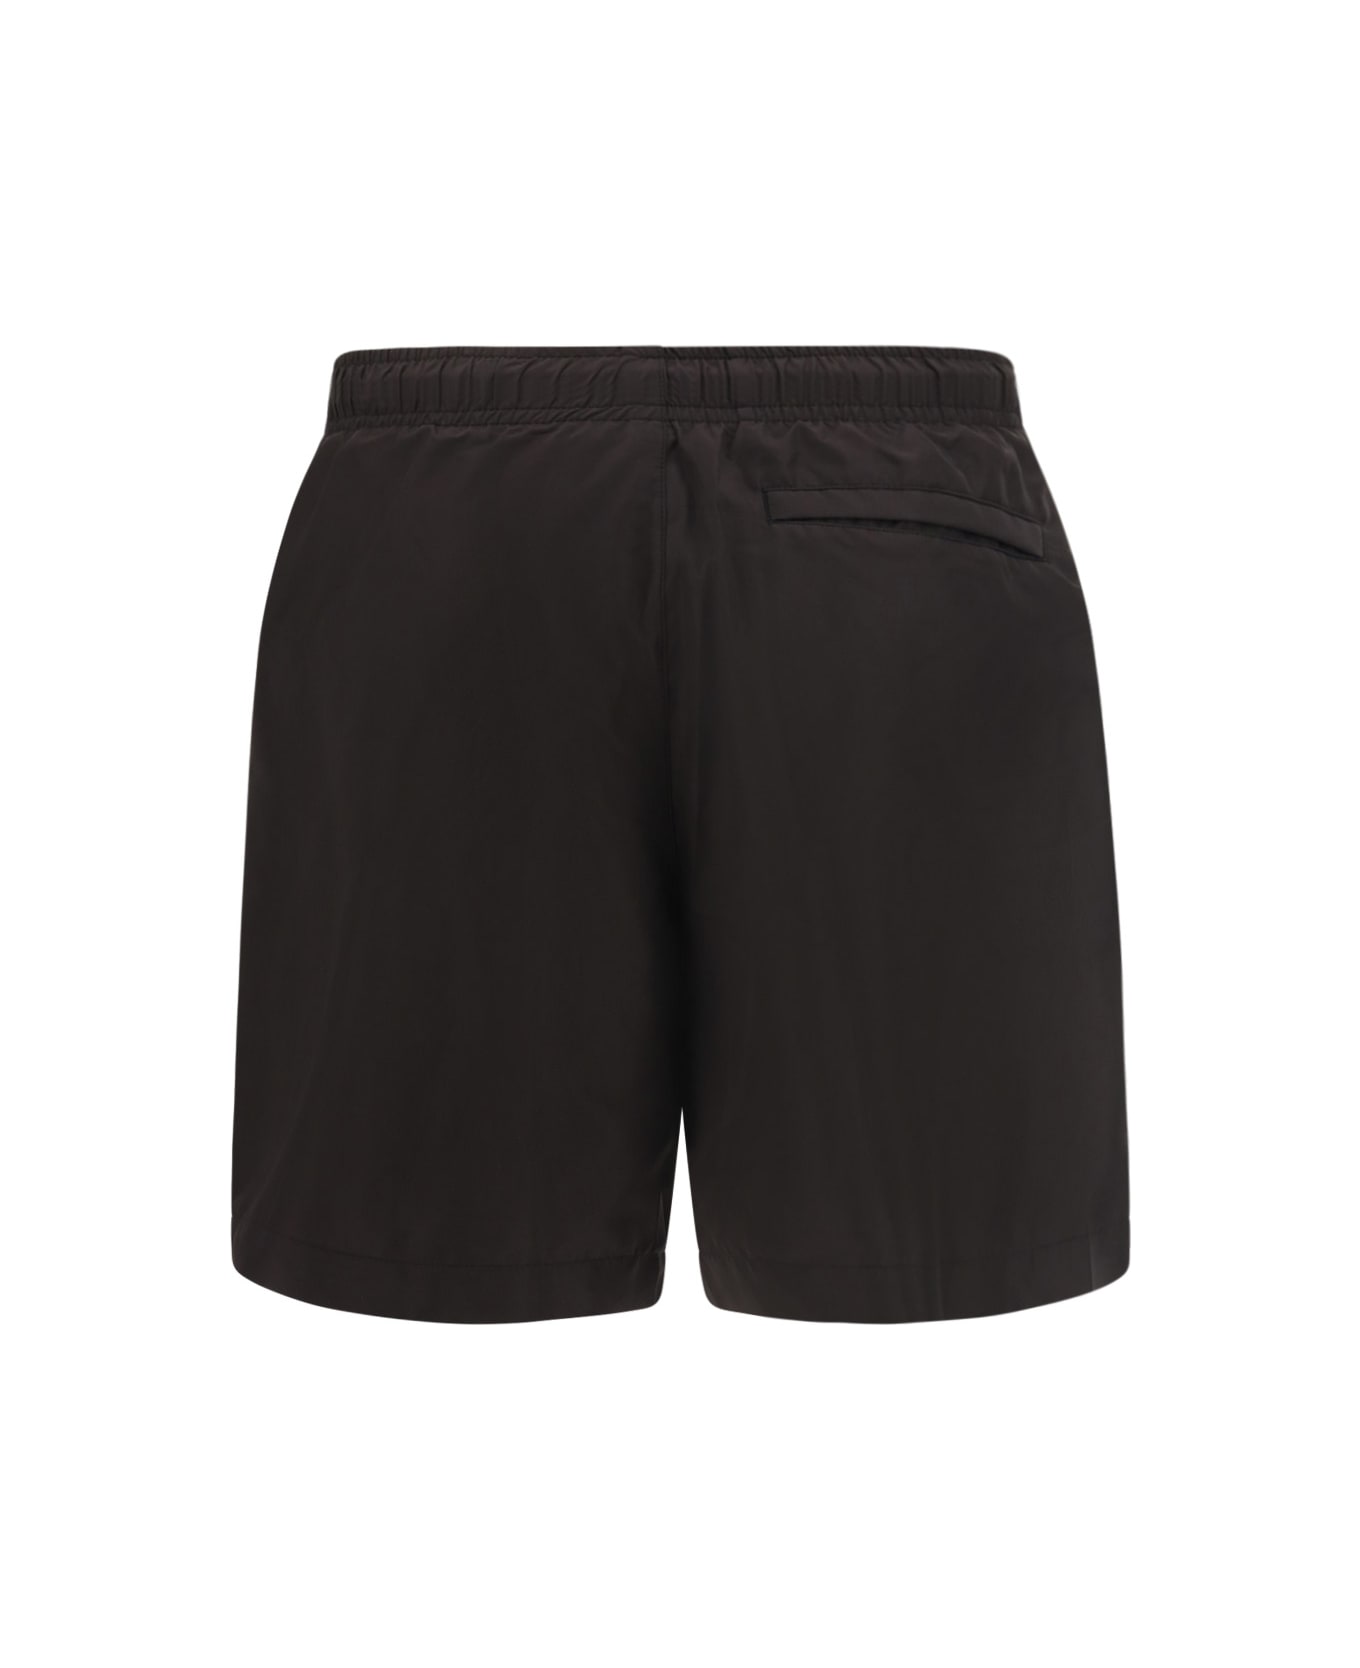 Givenchy item Black Polyester Swimming Shorts - Black/white